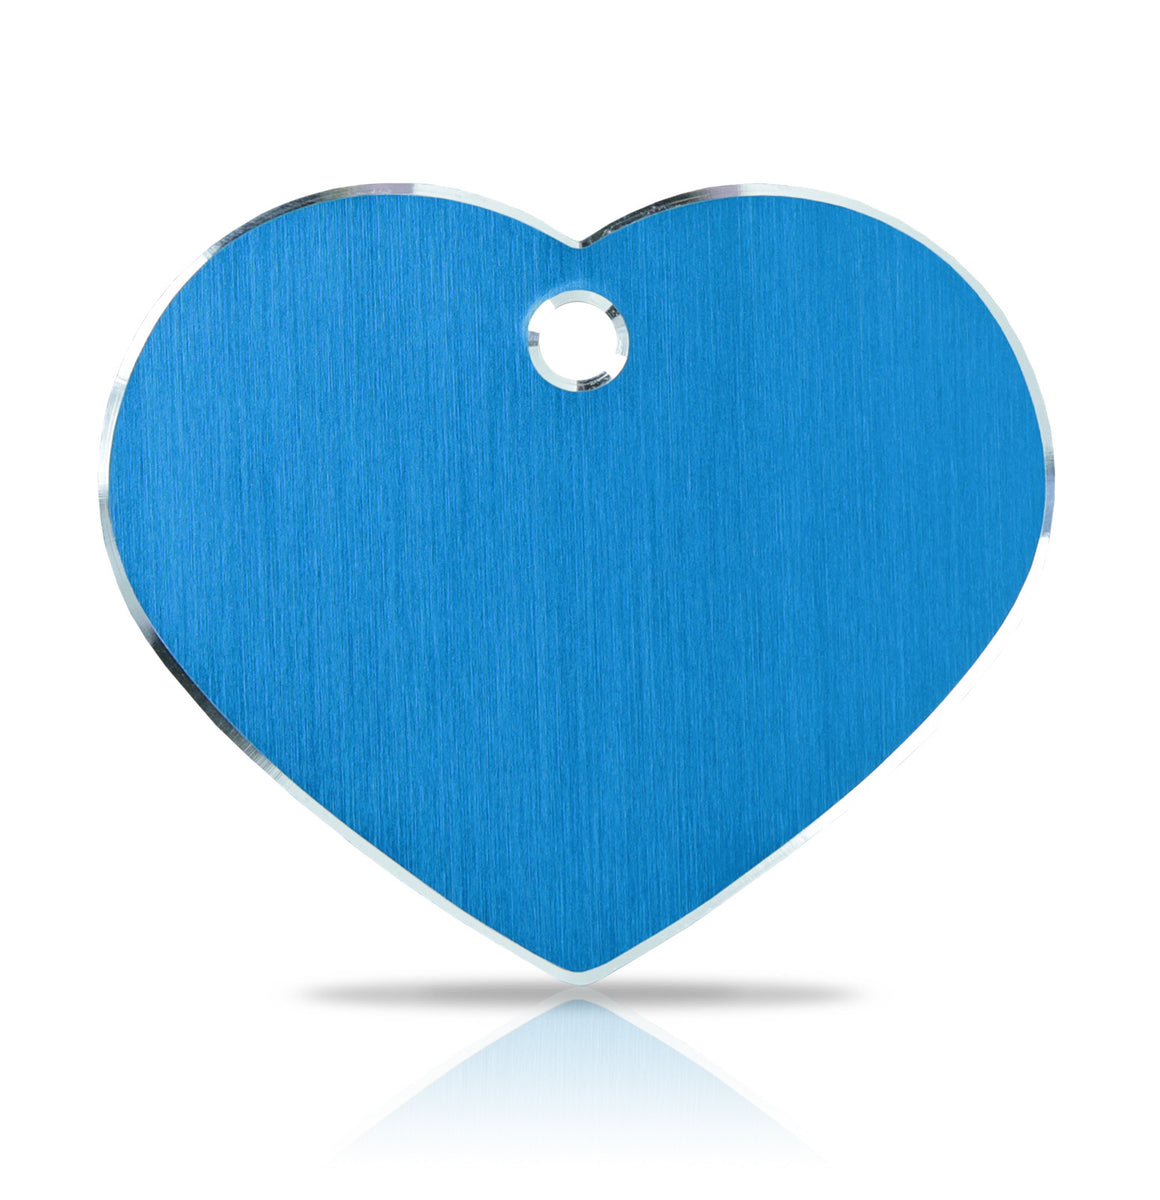 TaggIT Hi-Line Large Heart Blue Aluminum iMarc Pet Tag 